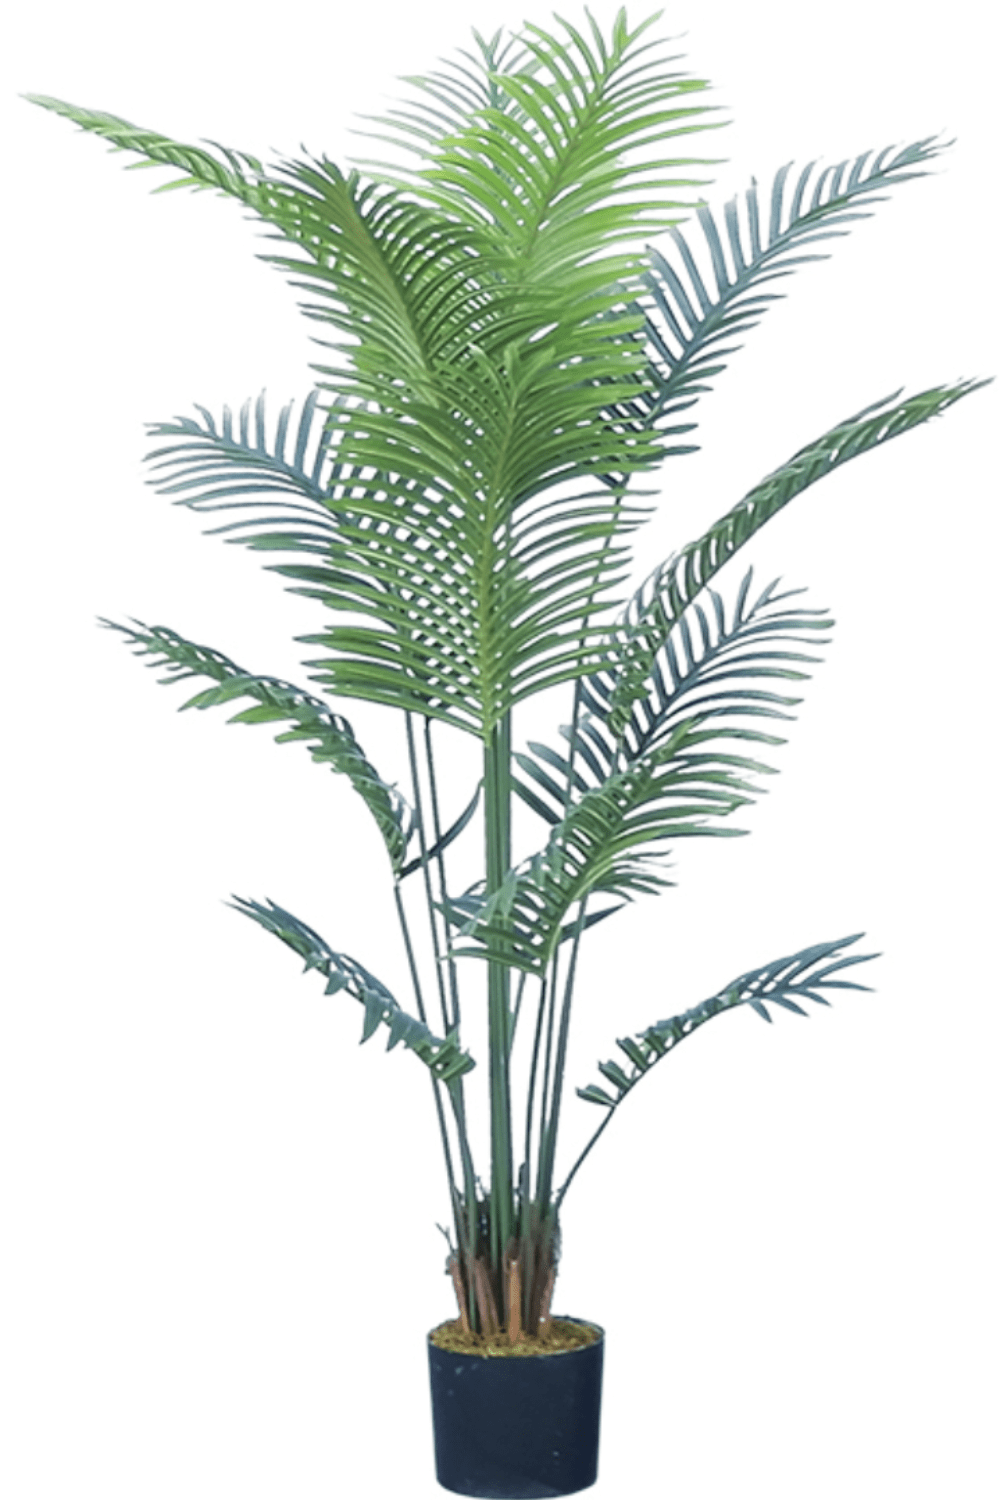 PrettyPflanzen | Hohe 160cm Kunstpalme | Qualität